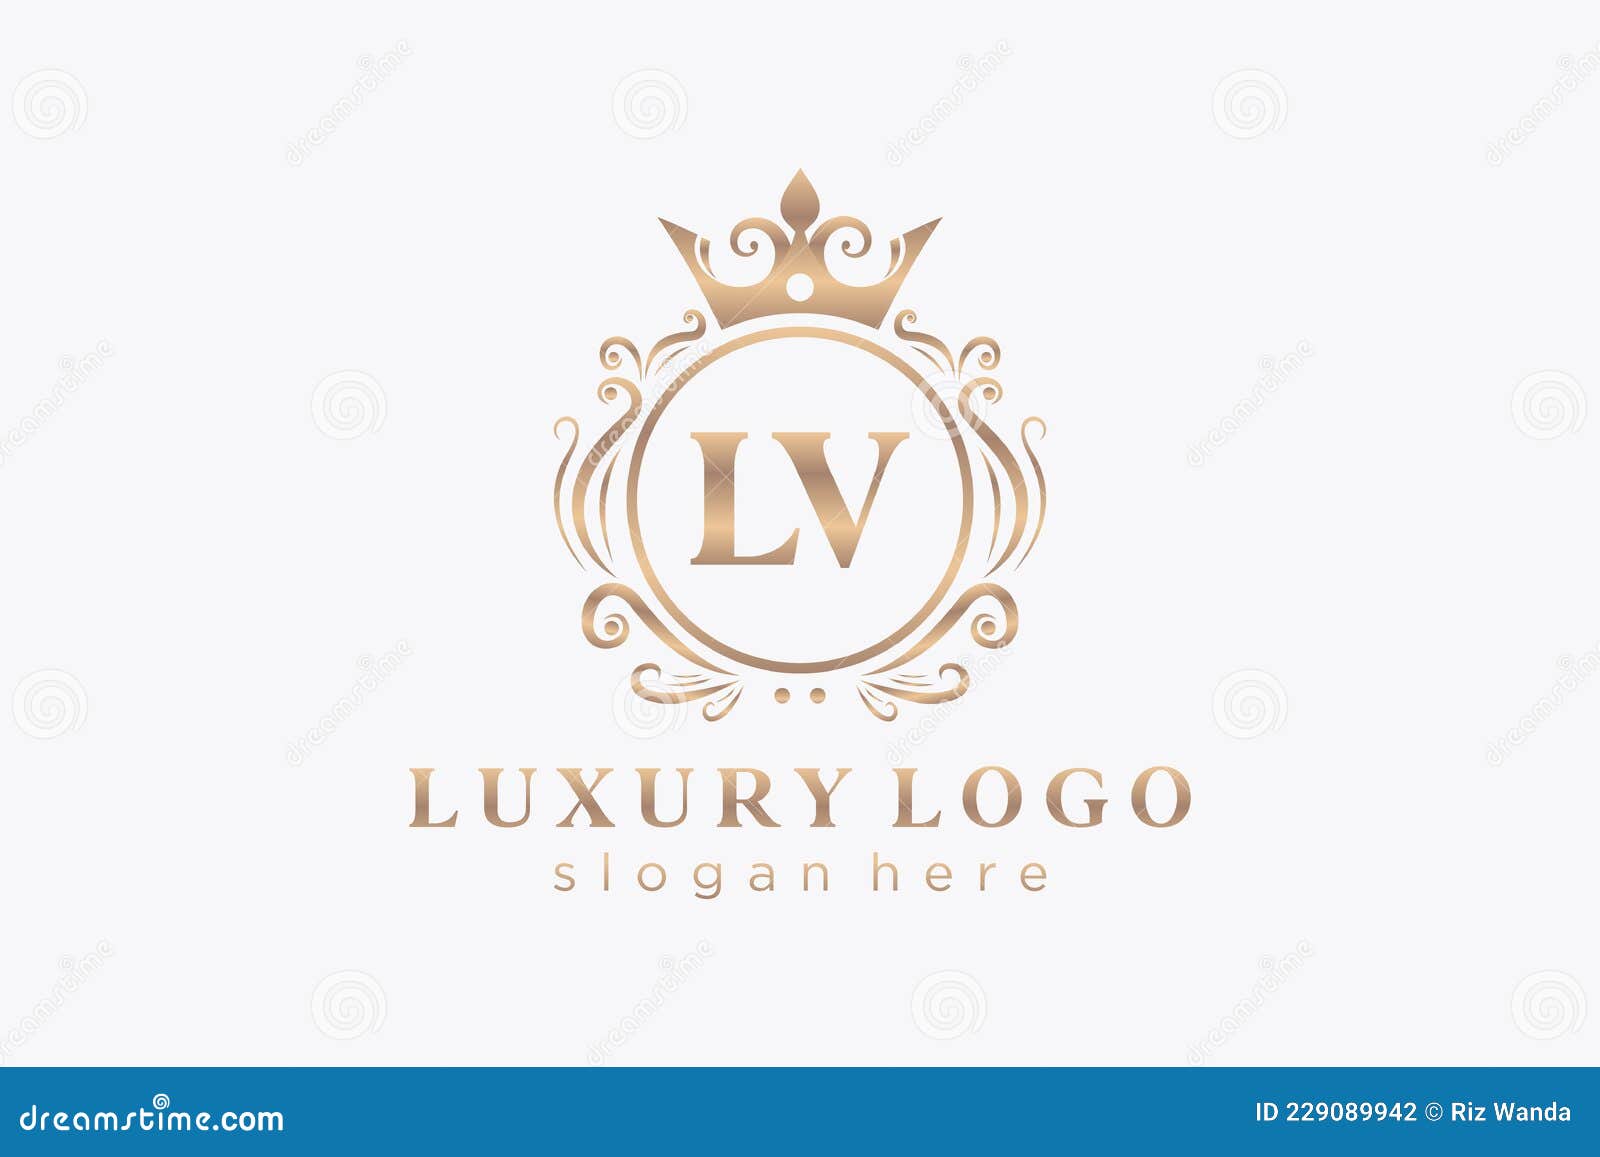 Initial LV Letter Royal Luxury Logo Template in Vector Art for